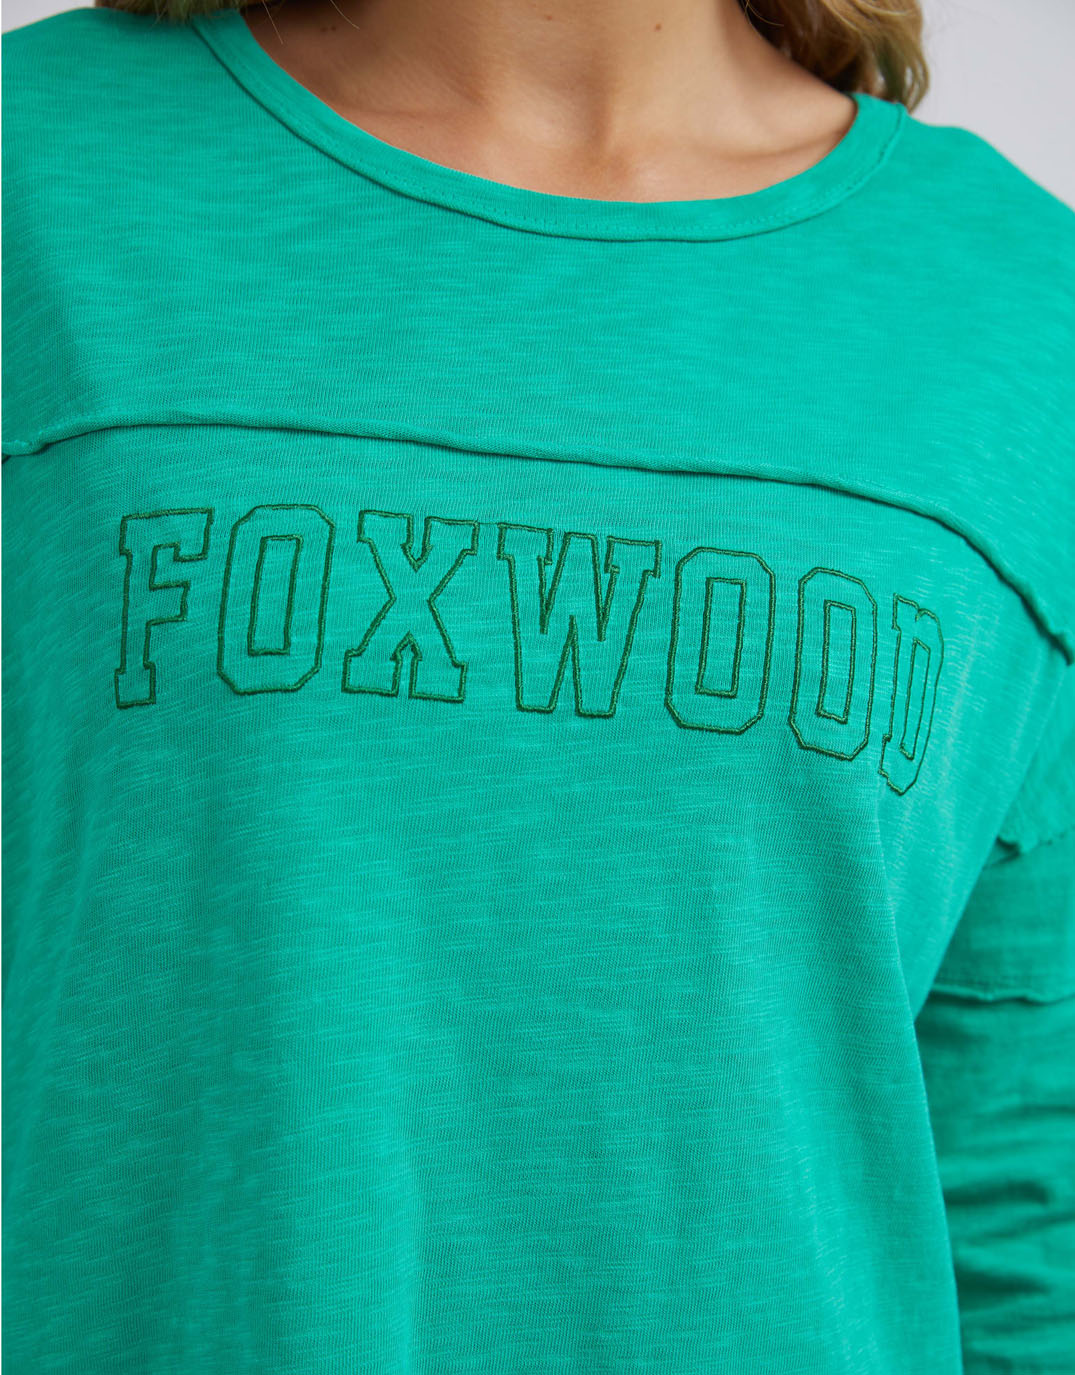 foxwood-throw-on-tee-green-womens-clothing